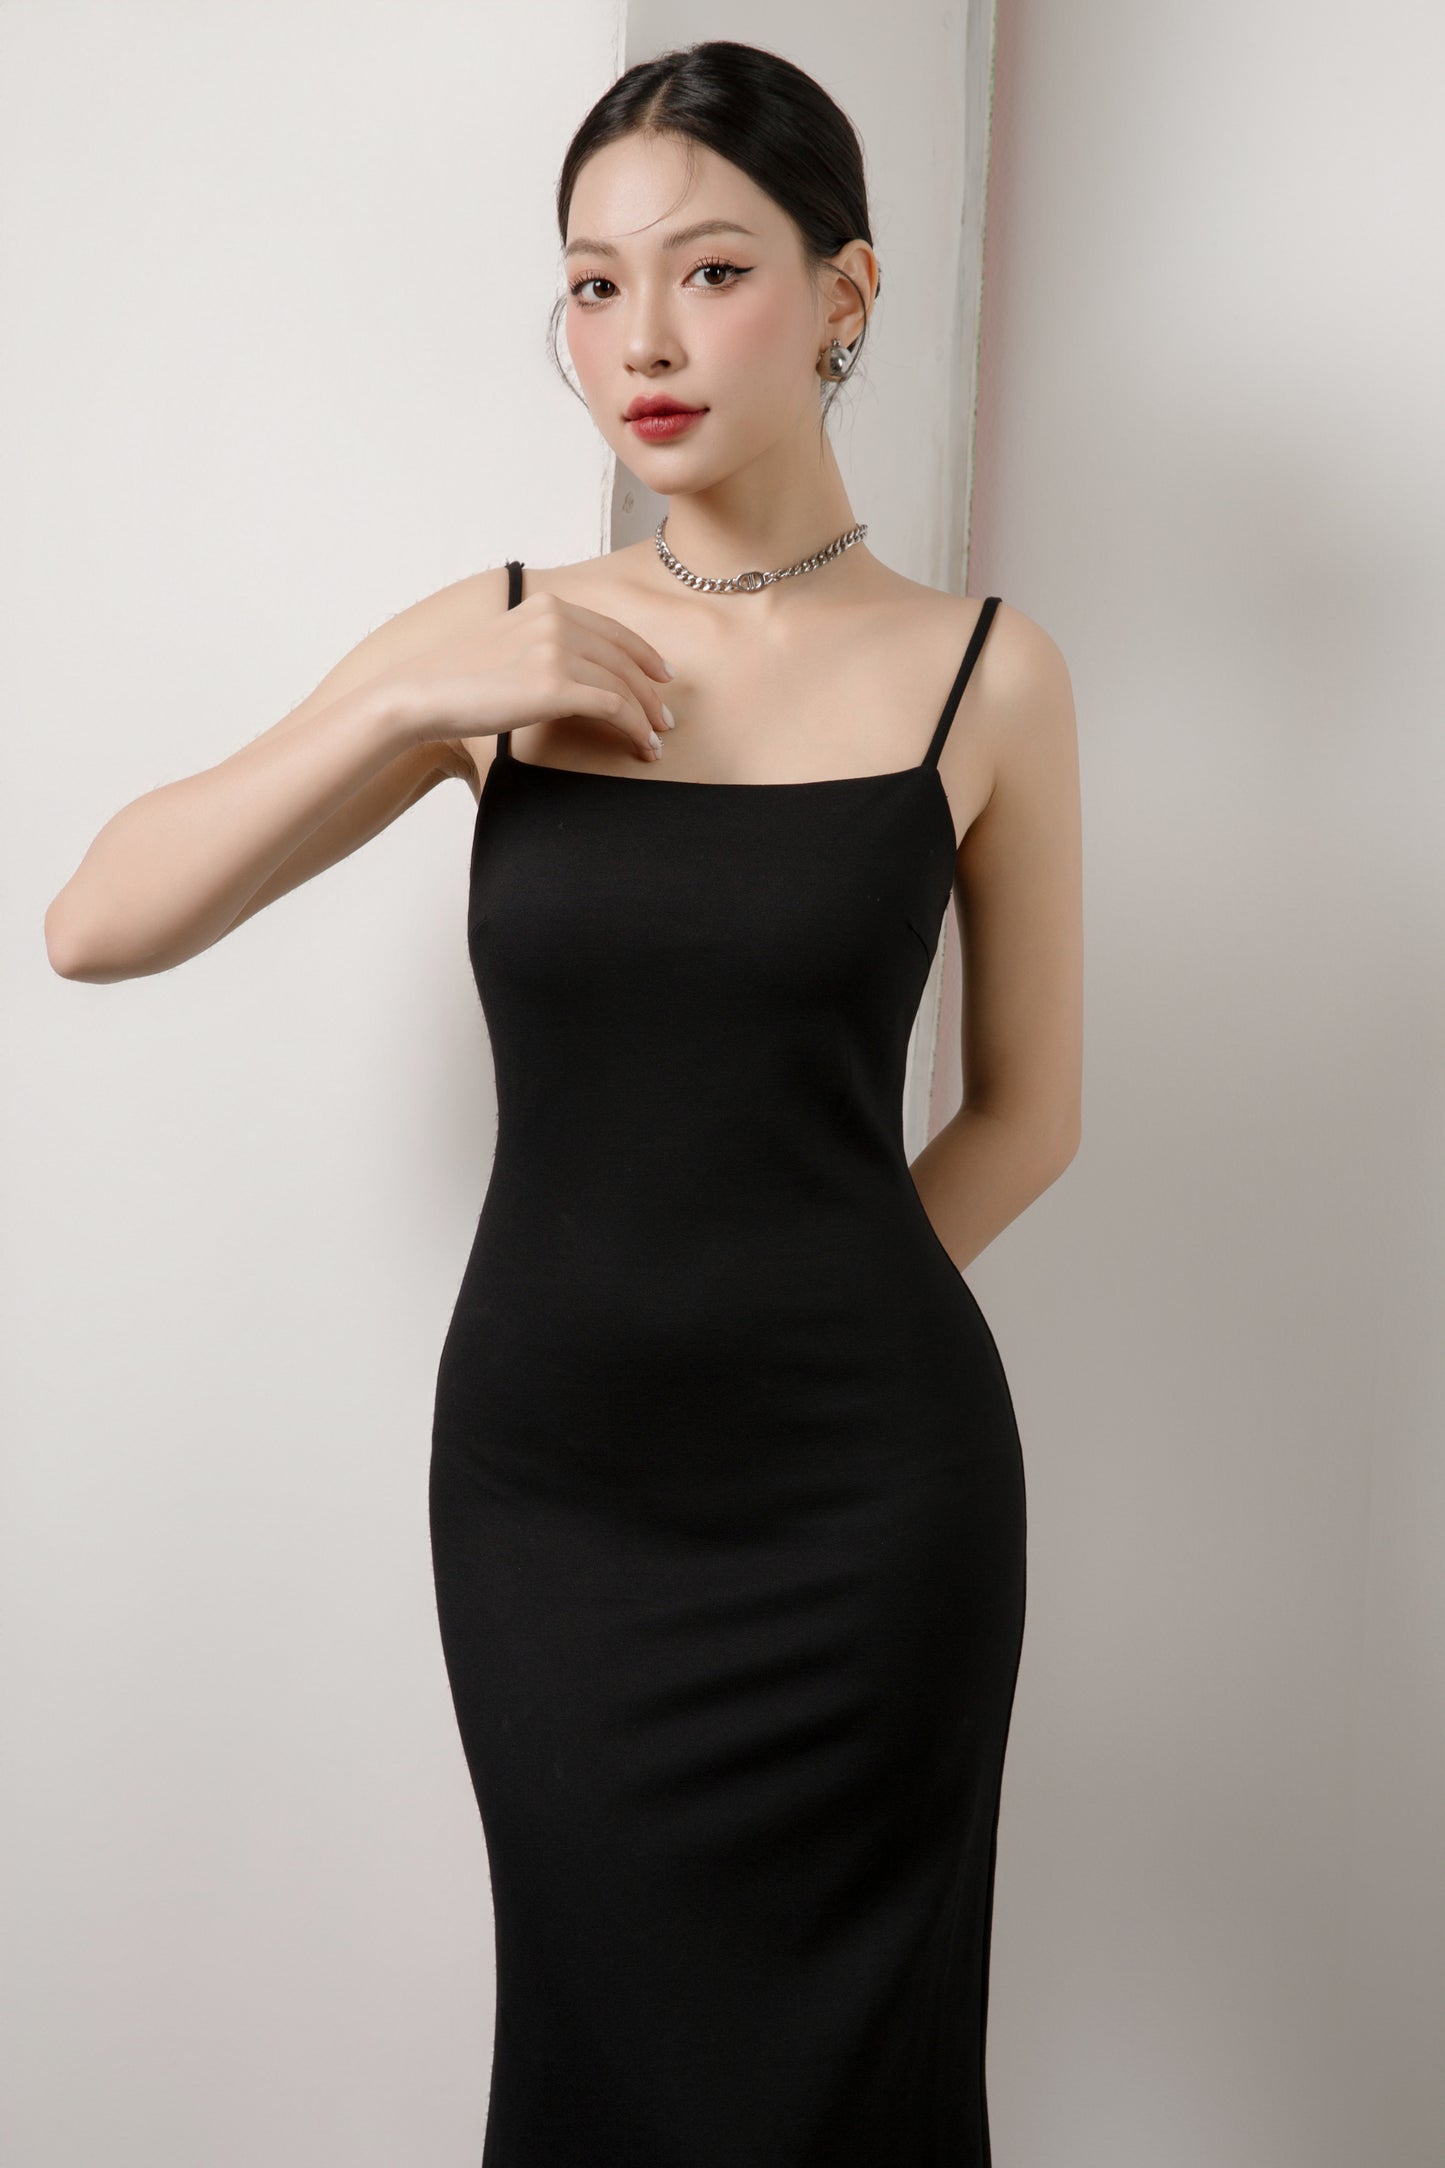 Tiffany U-Back Padded Dress in Black